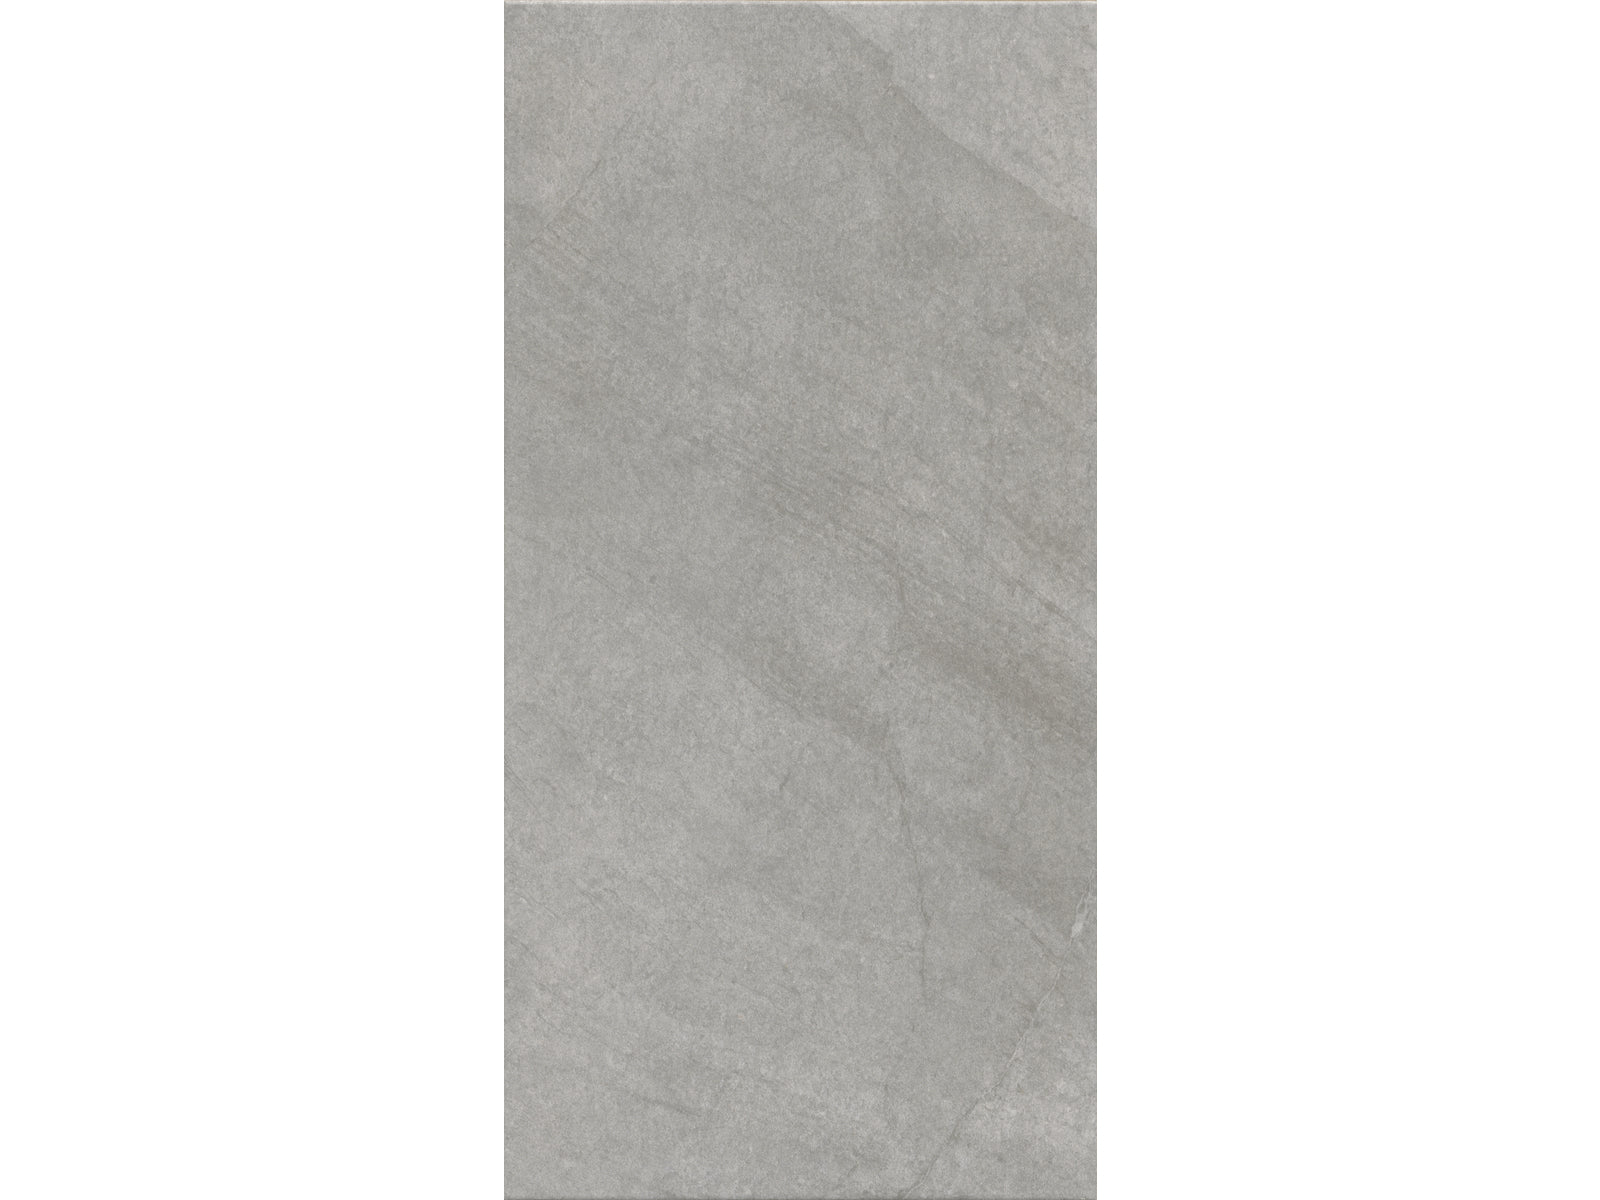 Cosmopol Grey Ceramic Wall Tile - 30 x 60cm